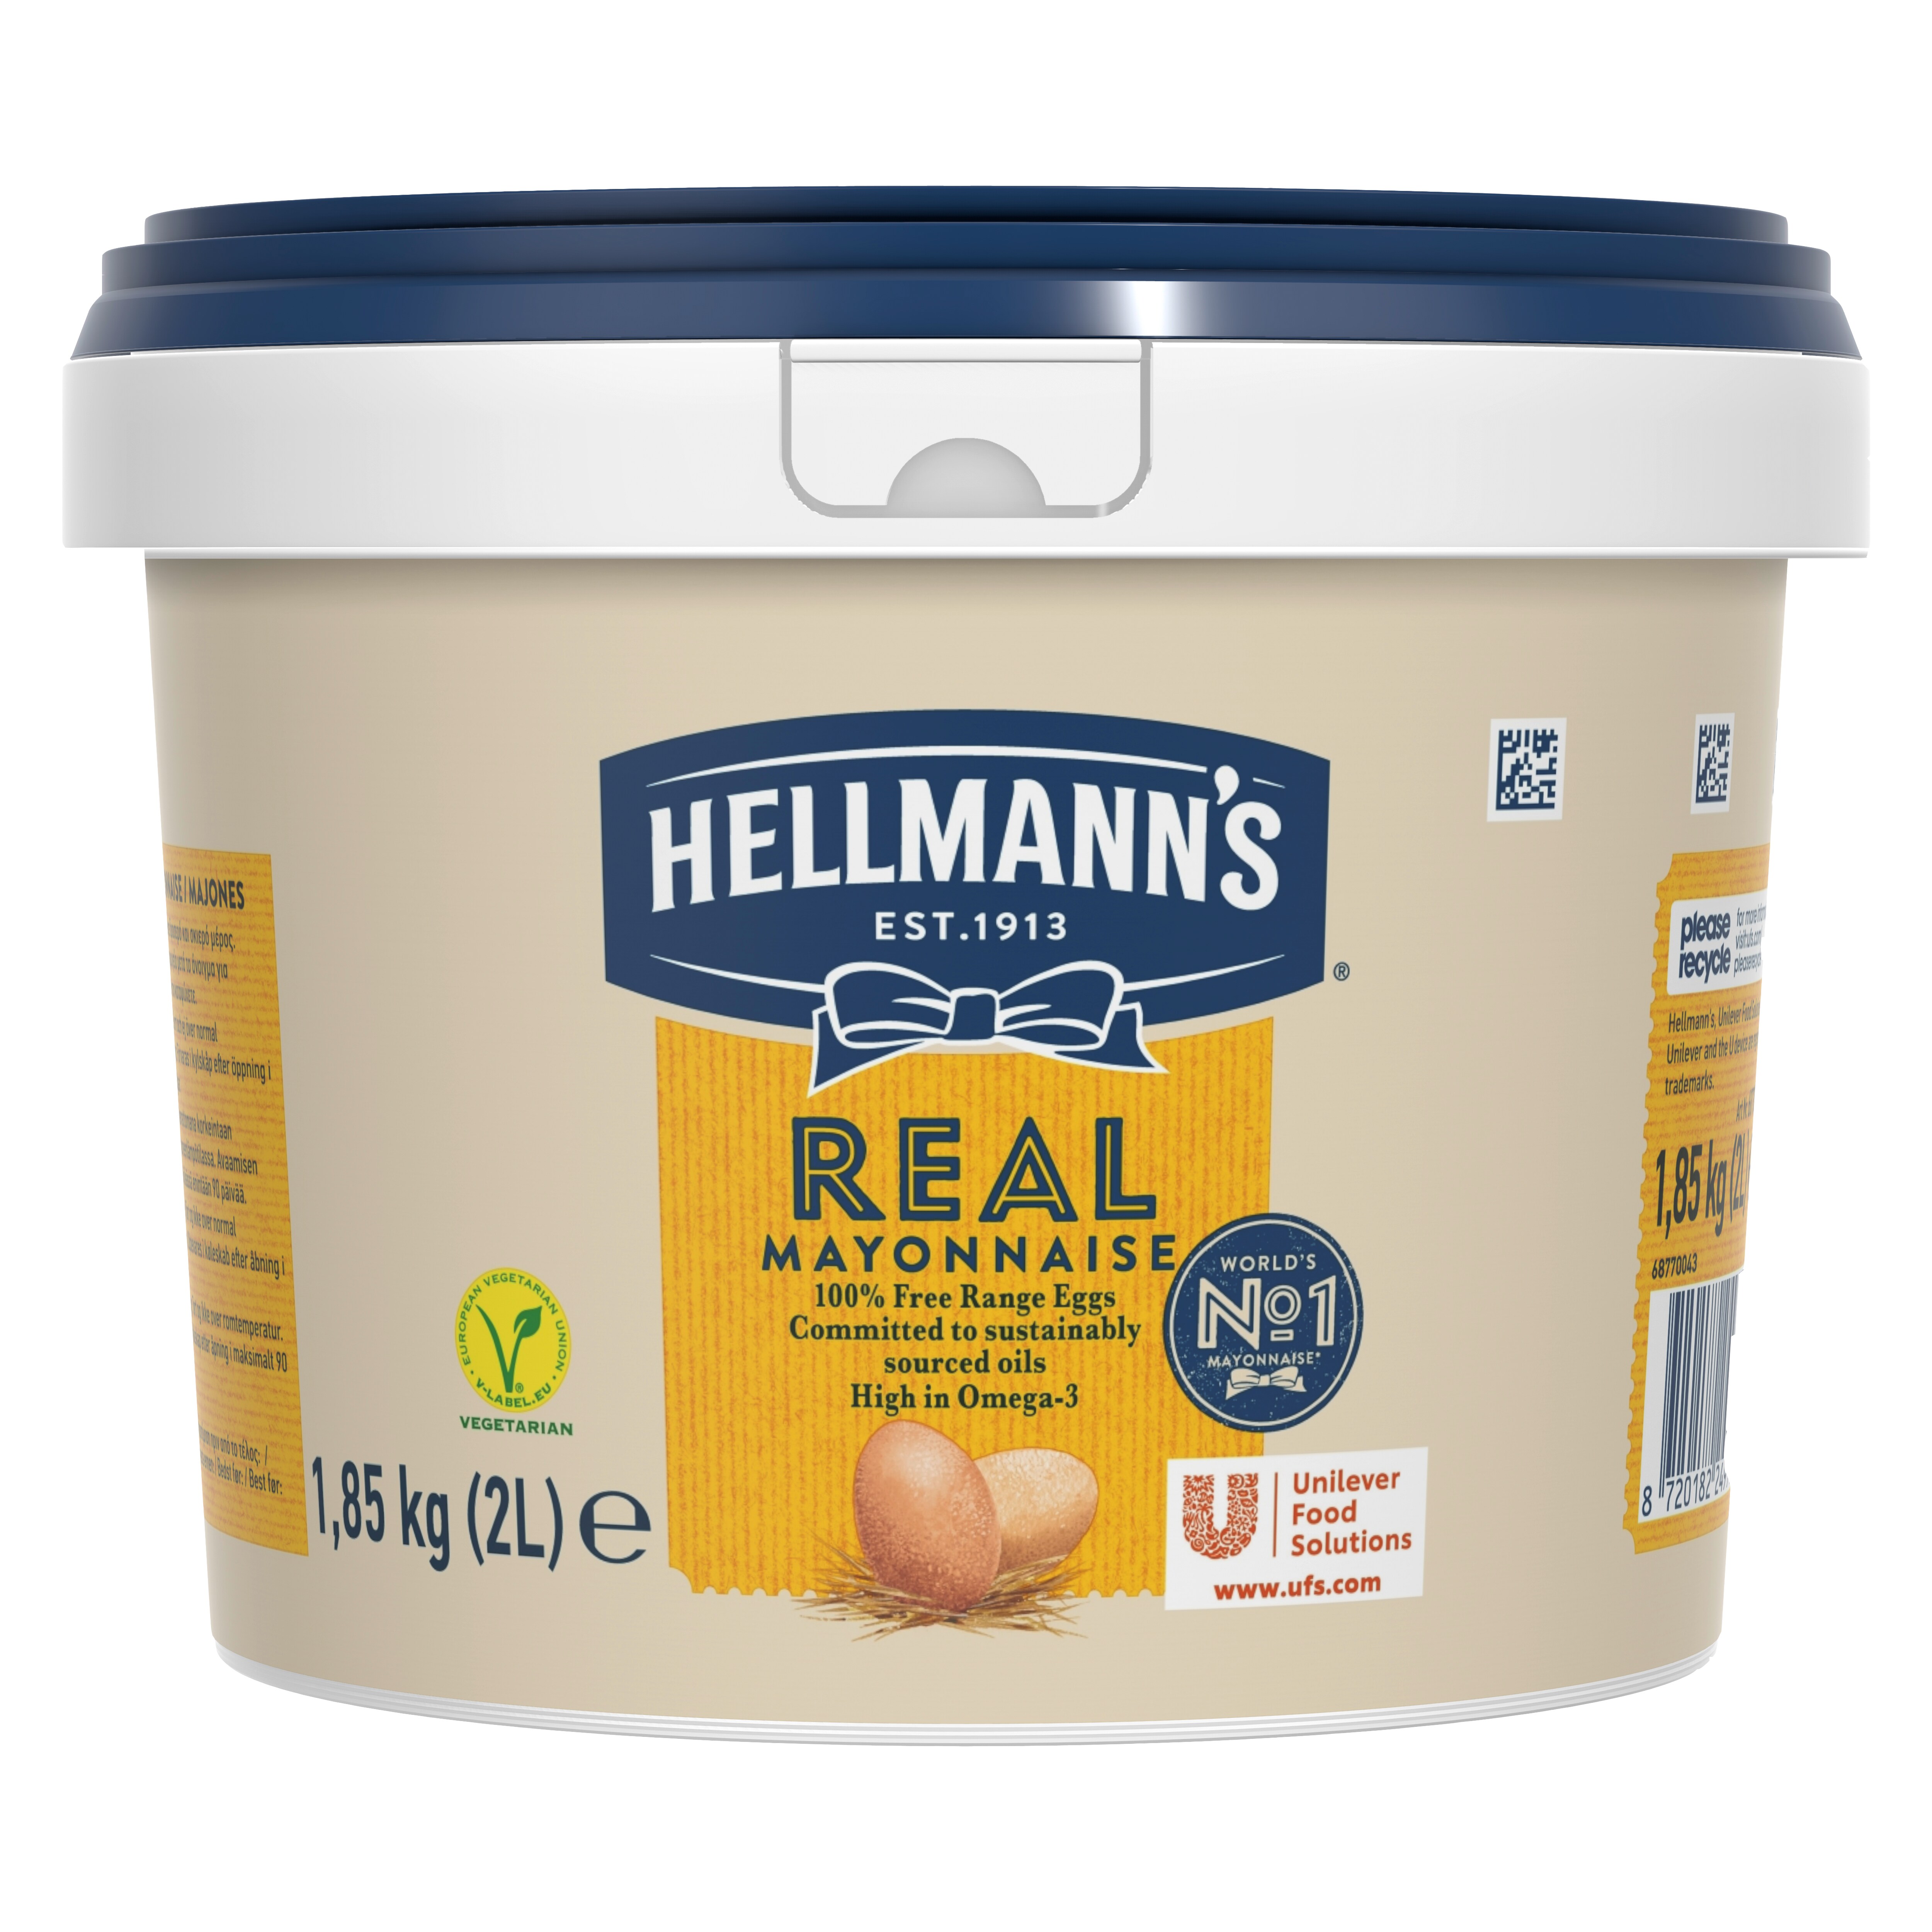 Hellmann's Real Majoneesi 2 L / 1,85 kg - 